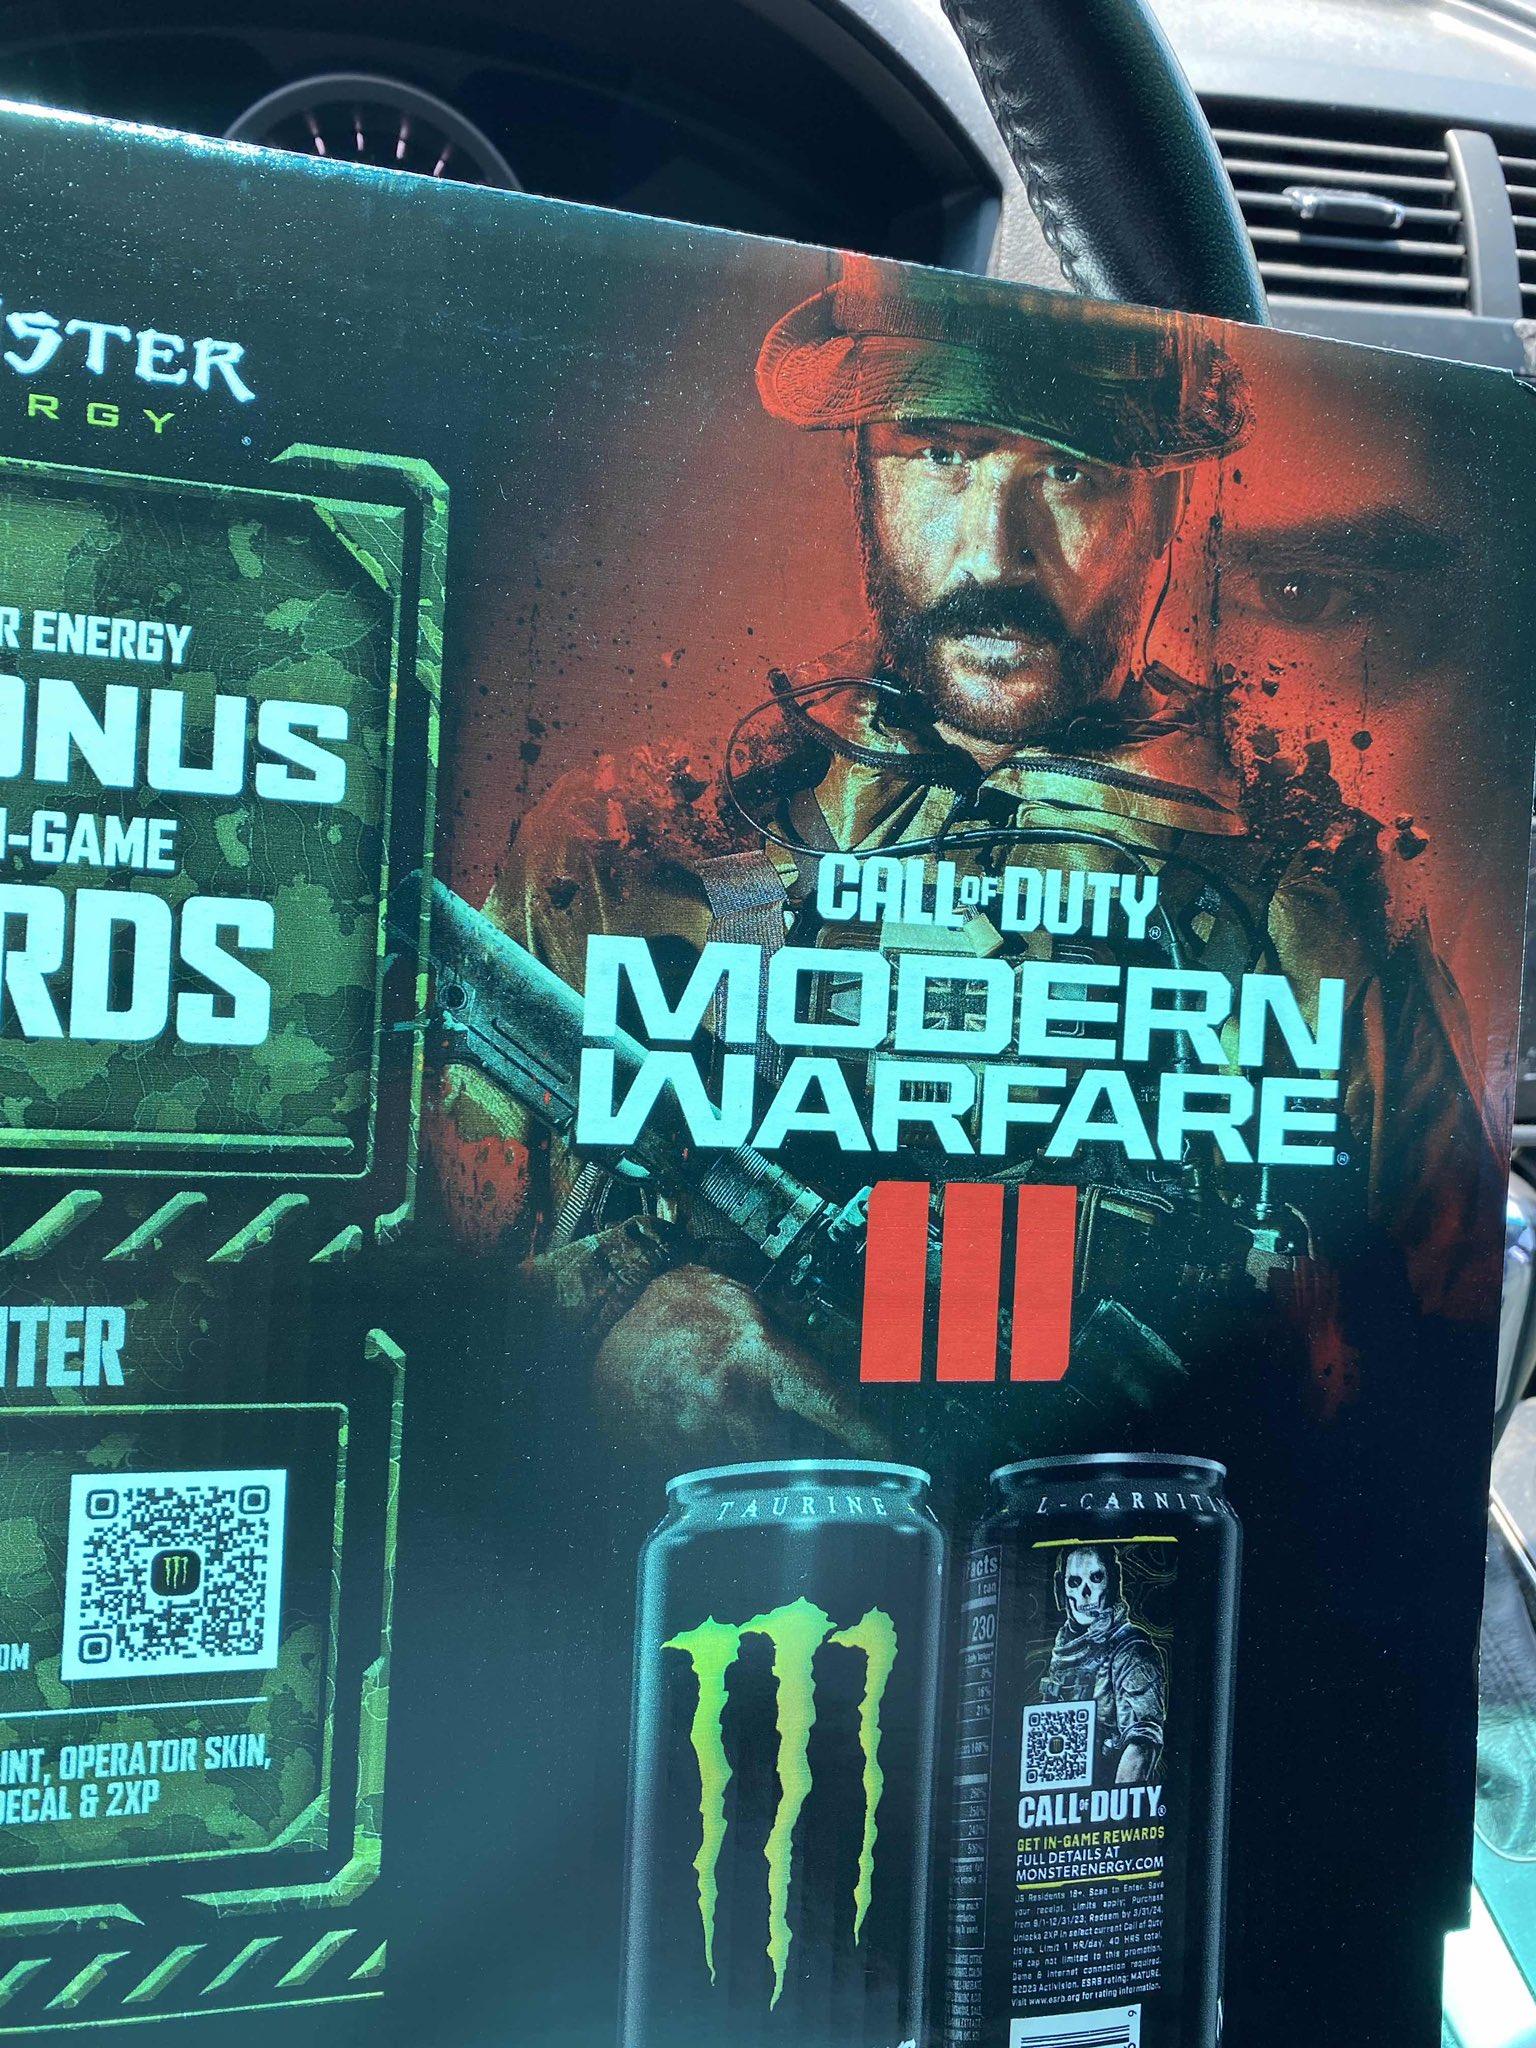 Obrázky uniknutého loga a názvu Call of Duty: Modern Warfare 3.